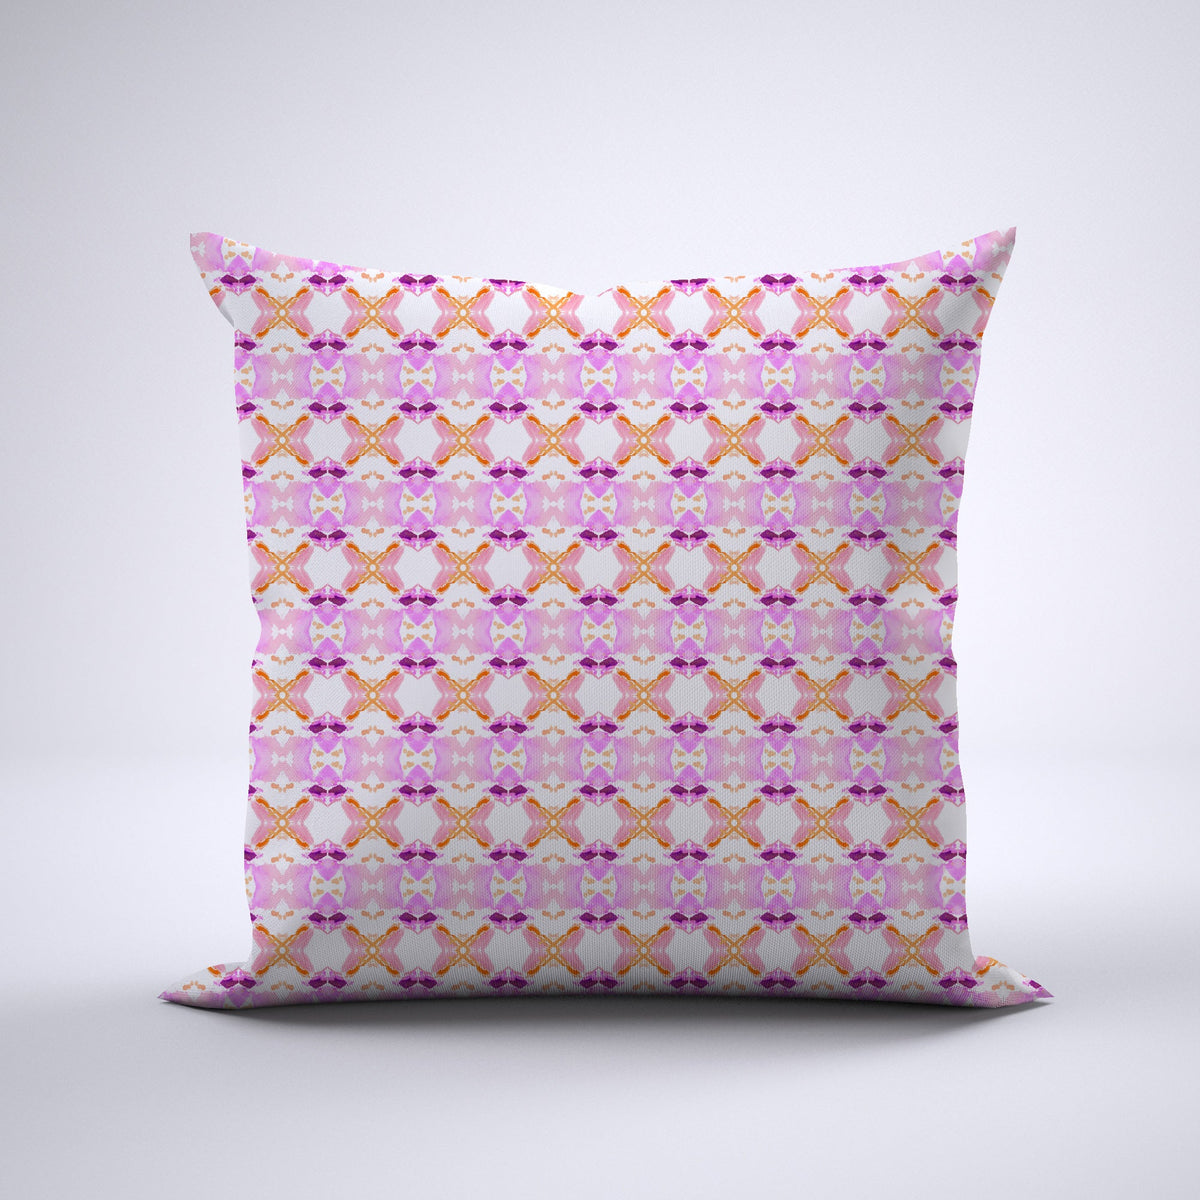 Throw Pillow - Nova Pink Monarch Bedding Collections, Pillows, Throw Pillows MWW 